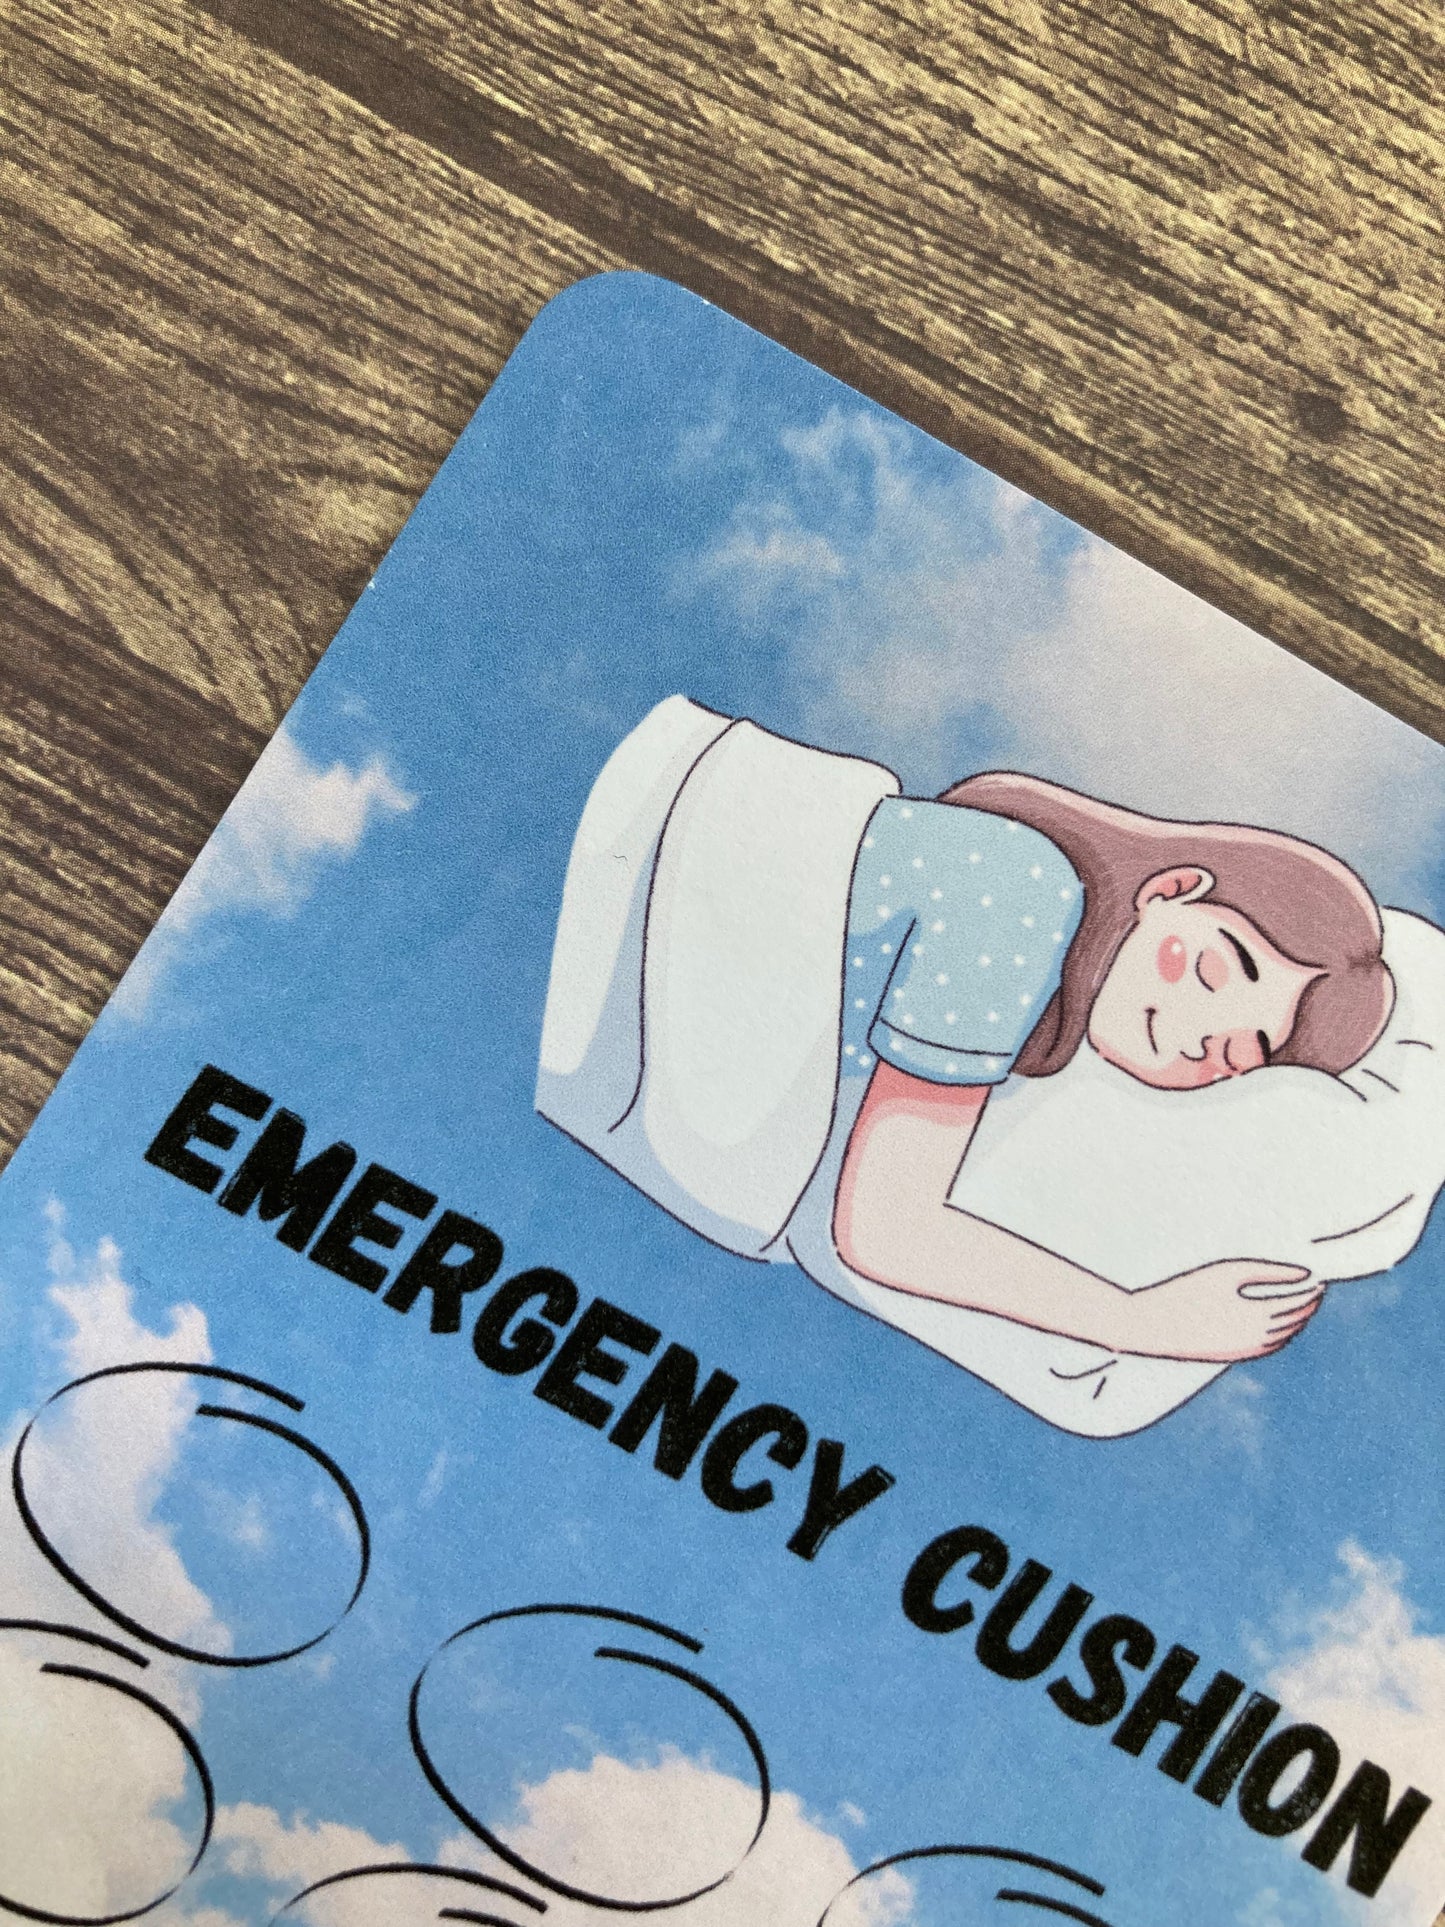 Saving challenge “emergency cushion”